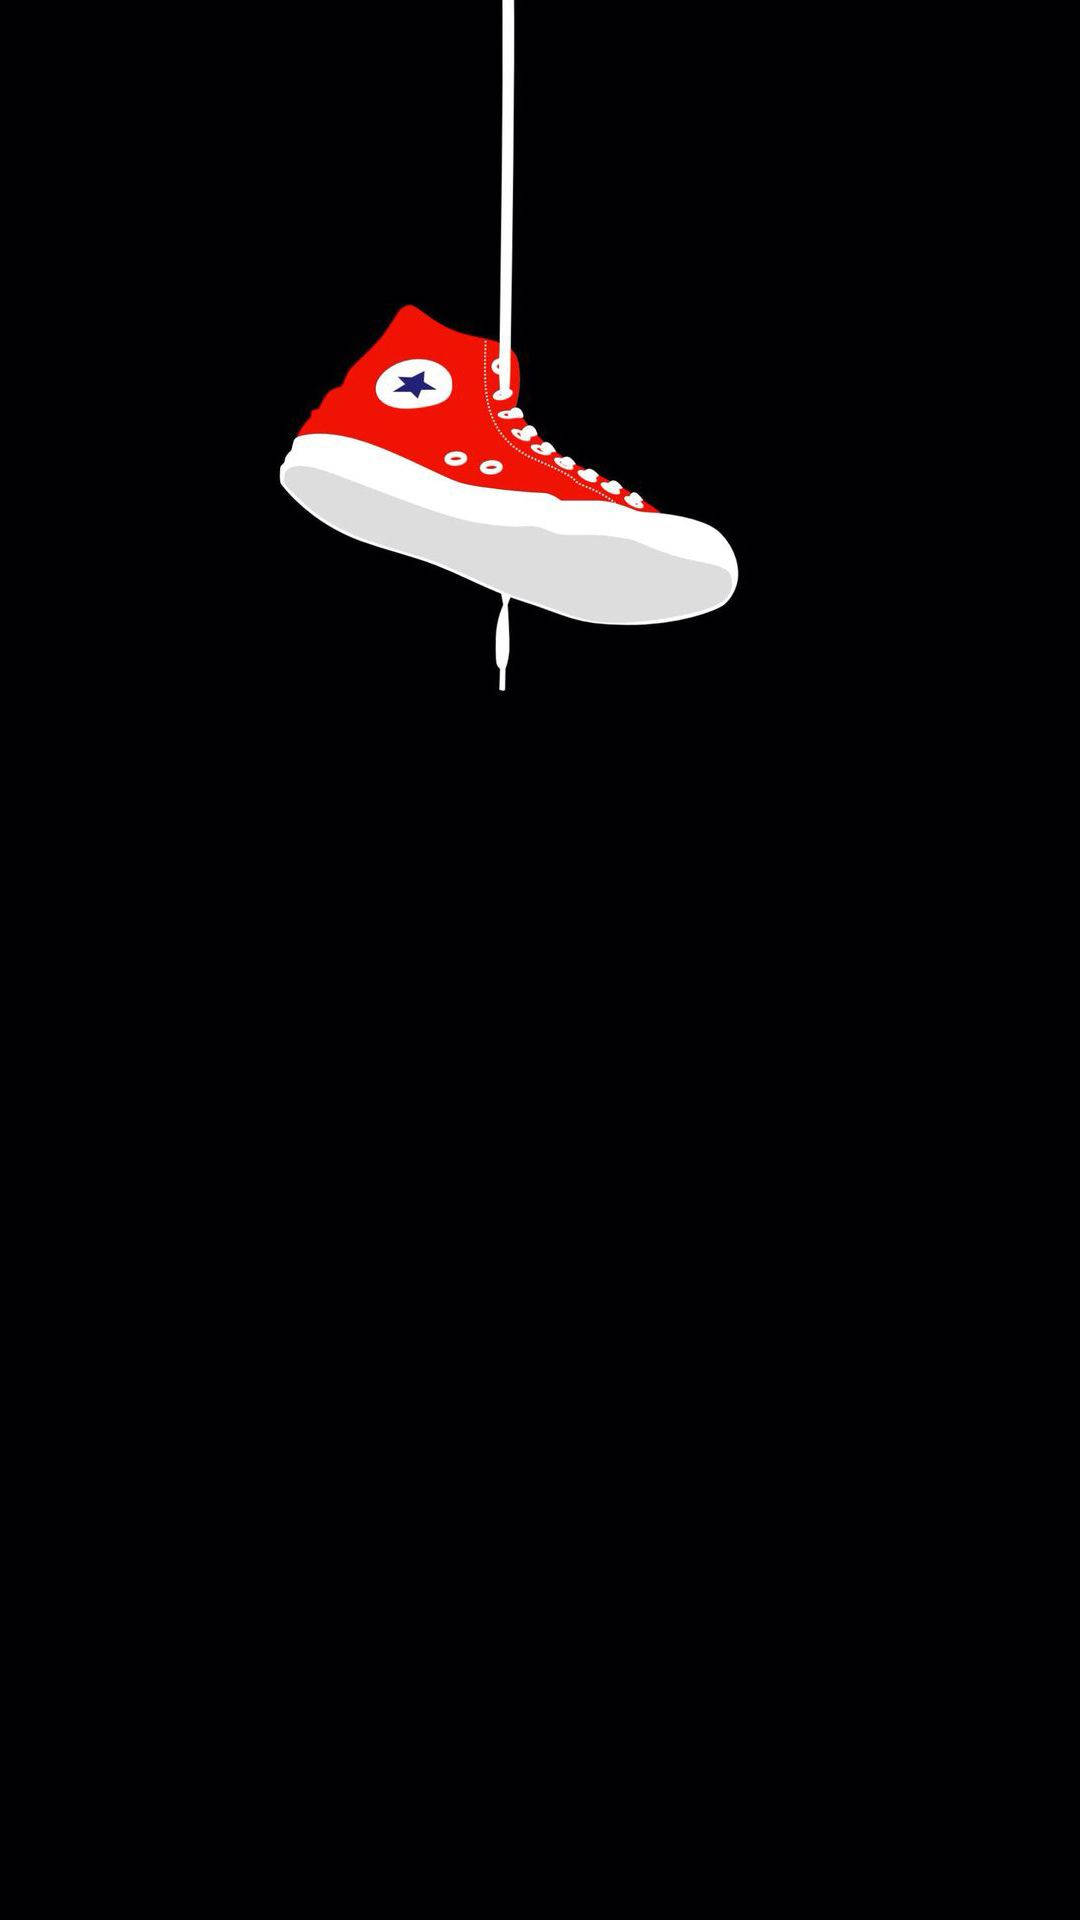 Sneaker Converse Hangs By Shoelace Background